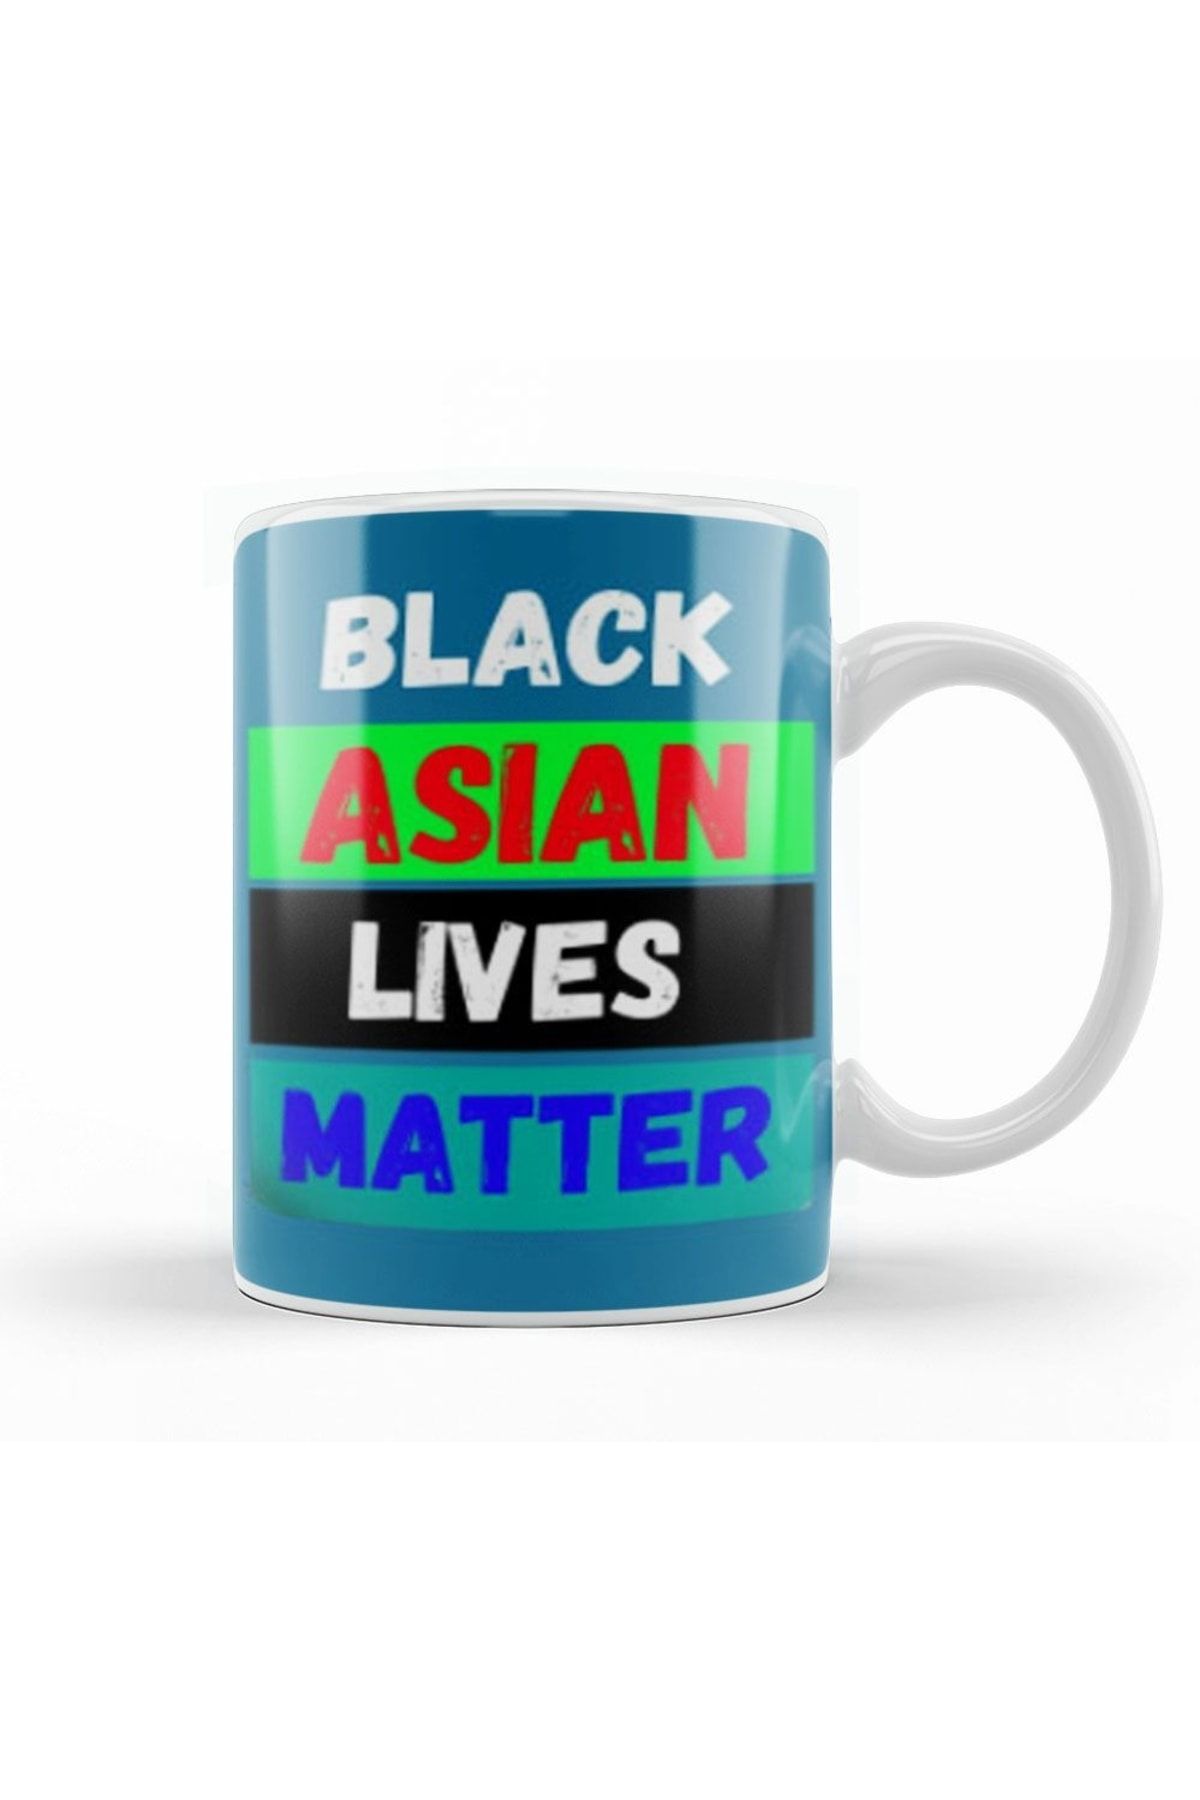 Humuts Black Asian Lives Matter Stop Aapı Hate Kupa Bardak Porselen